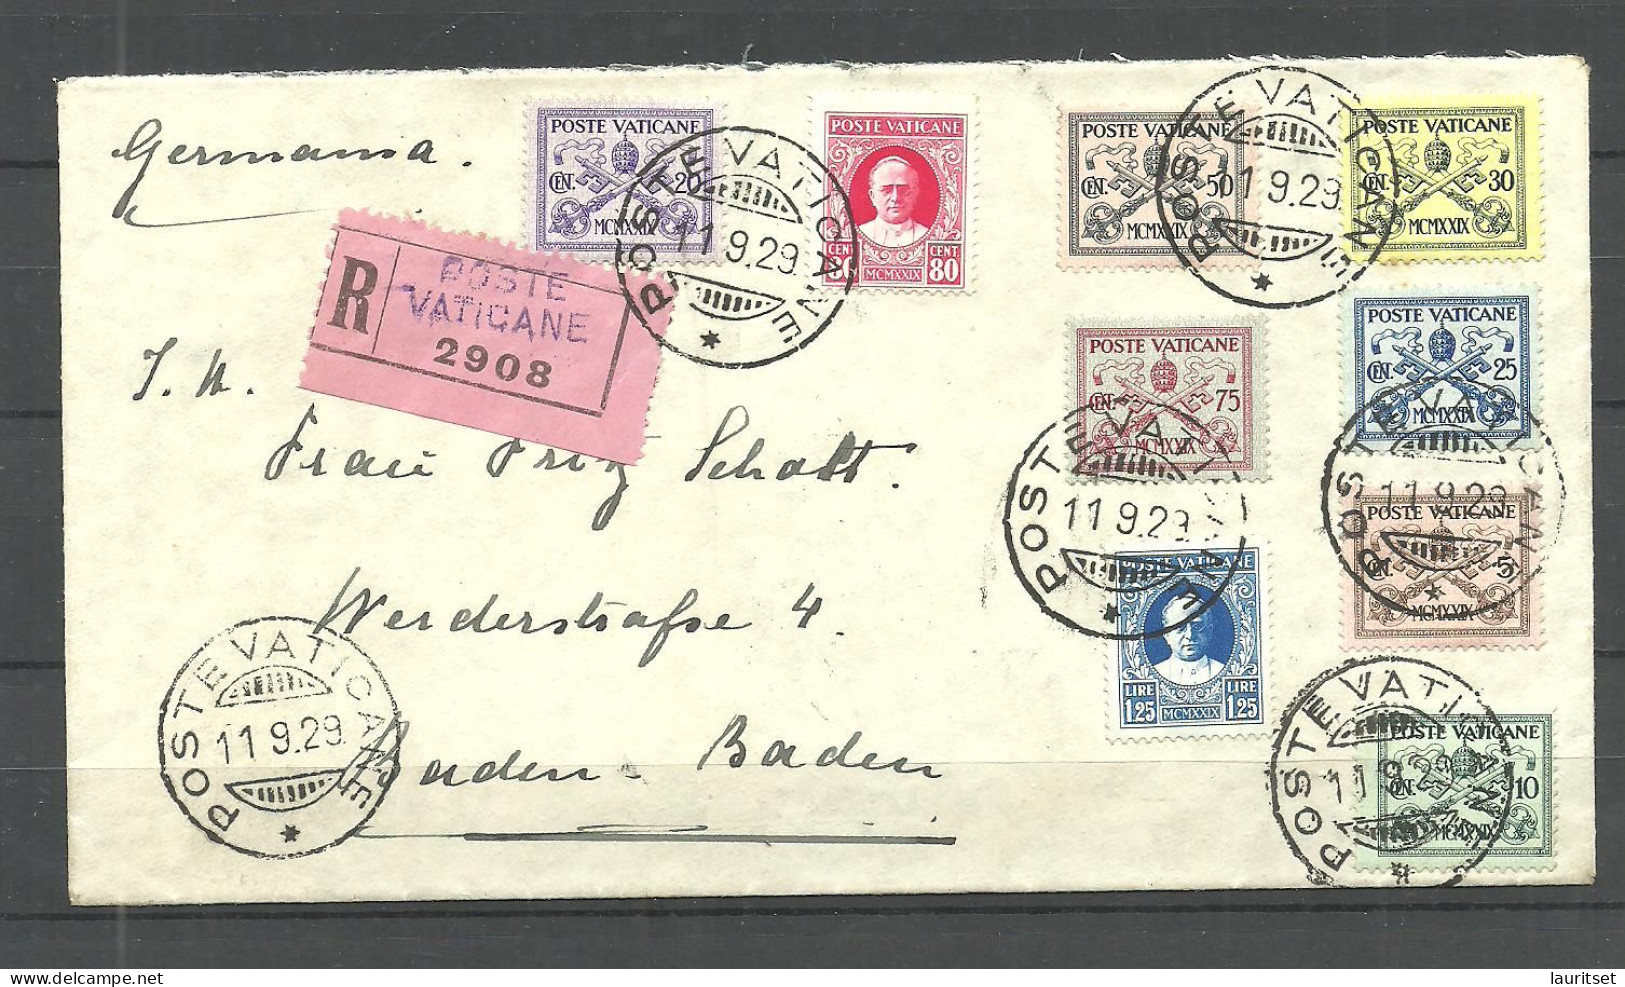 VATICAN Vatikan Poste Varticane 1929 Air Mail Cover Posta Aerea Air Mail Flugpost To Germany Baden Baden - Briefe U. Dokumente